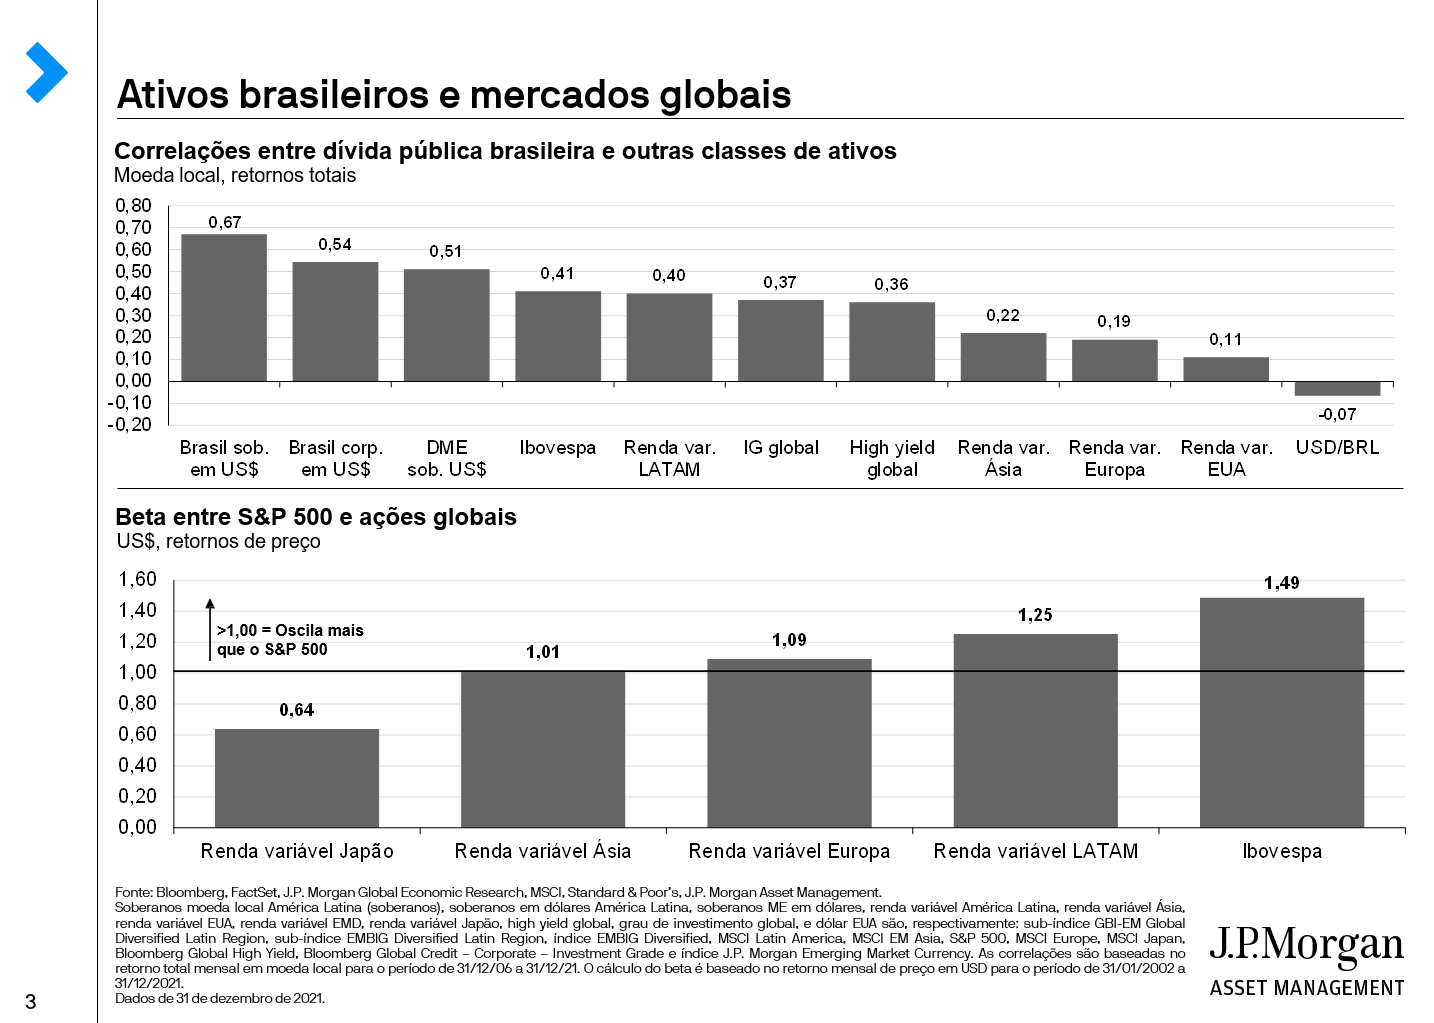 Brazilian assets and global markets